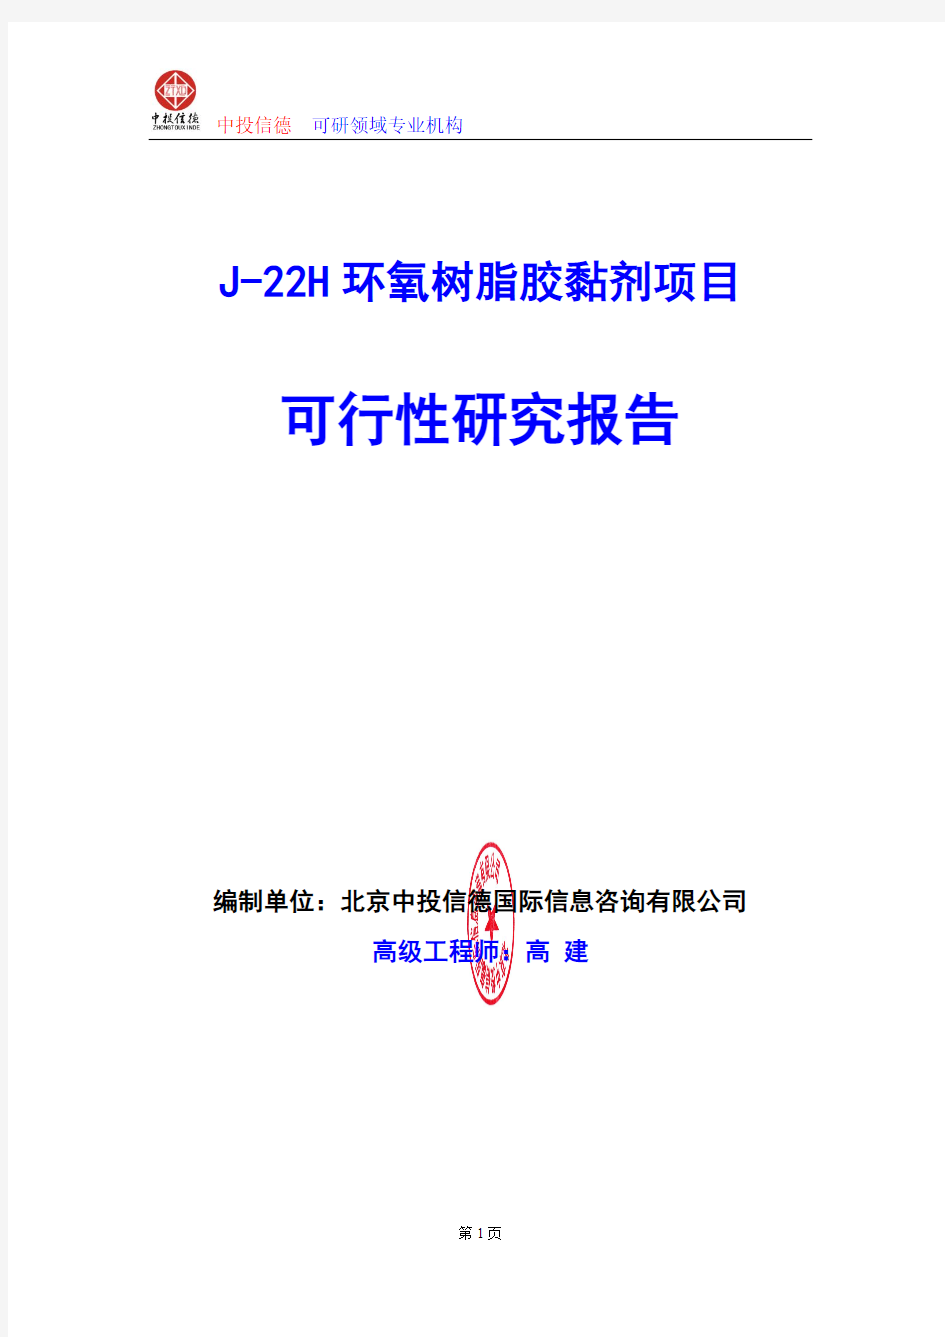 J-22H环氧树脂胶黏剂项目可行性研究报告编制格式说明(模板型word)